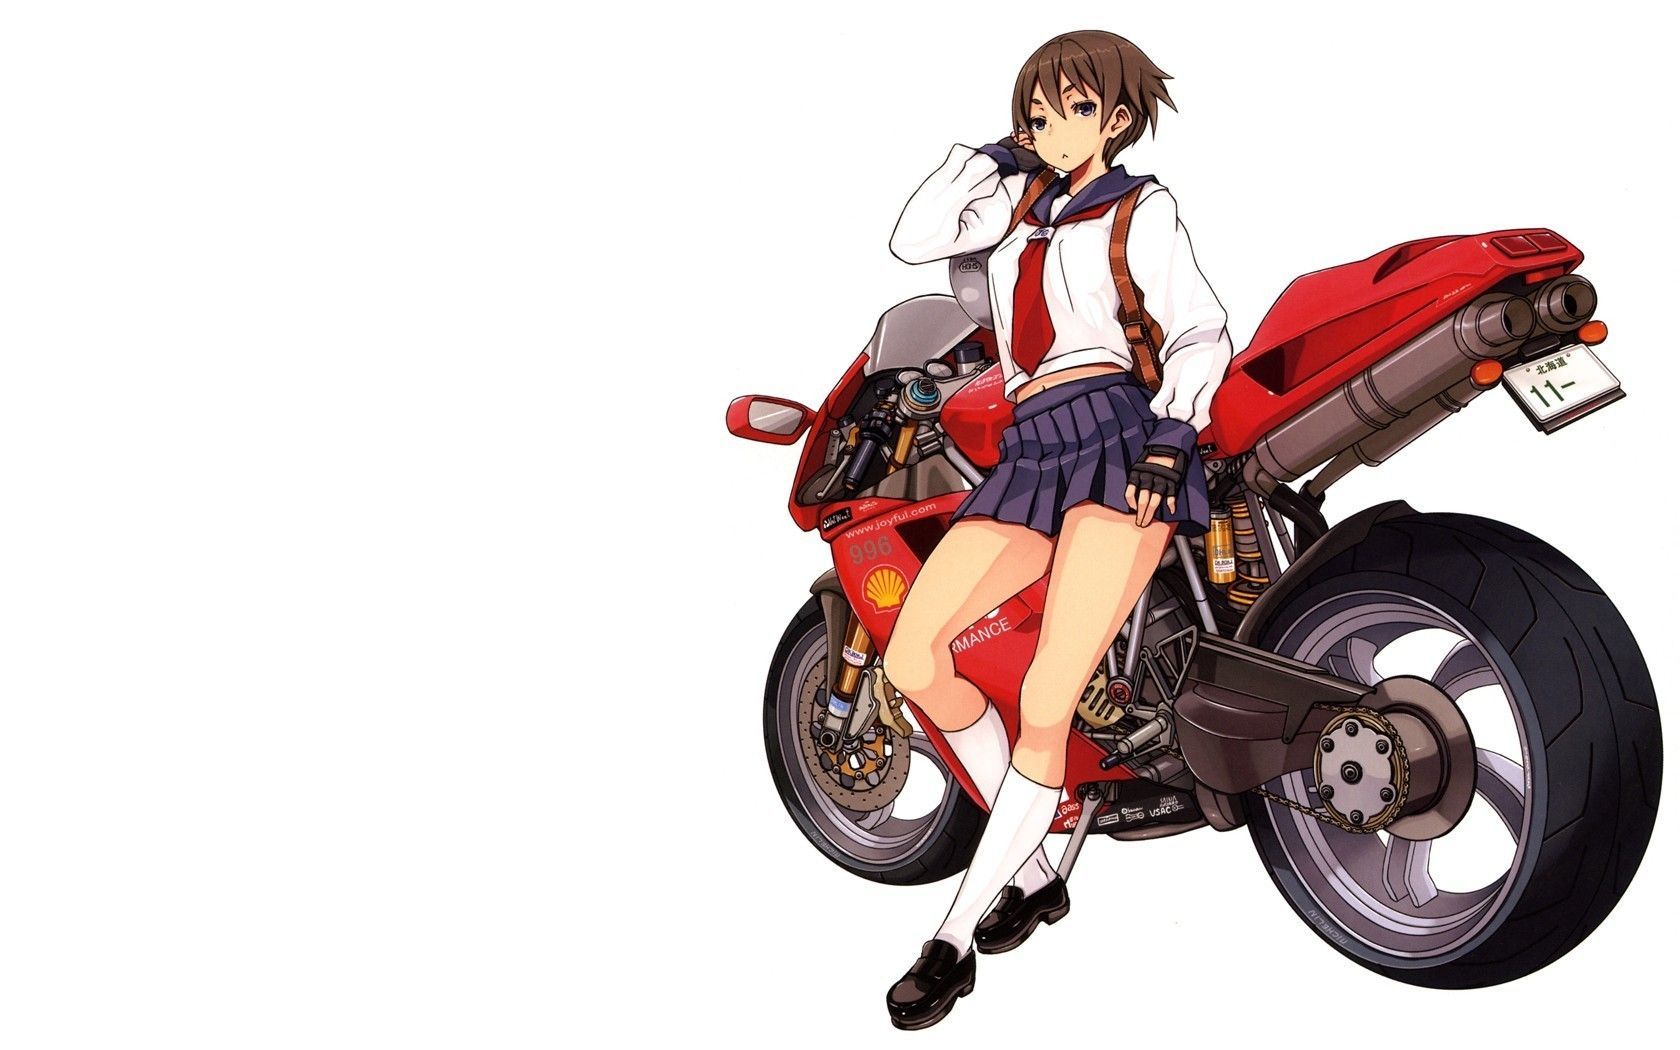 Fan Auctions Yuruyuri Ita-Motorcycle - Interest - Anime News Network